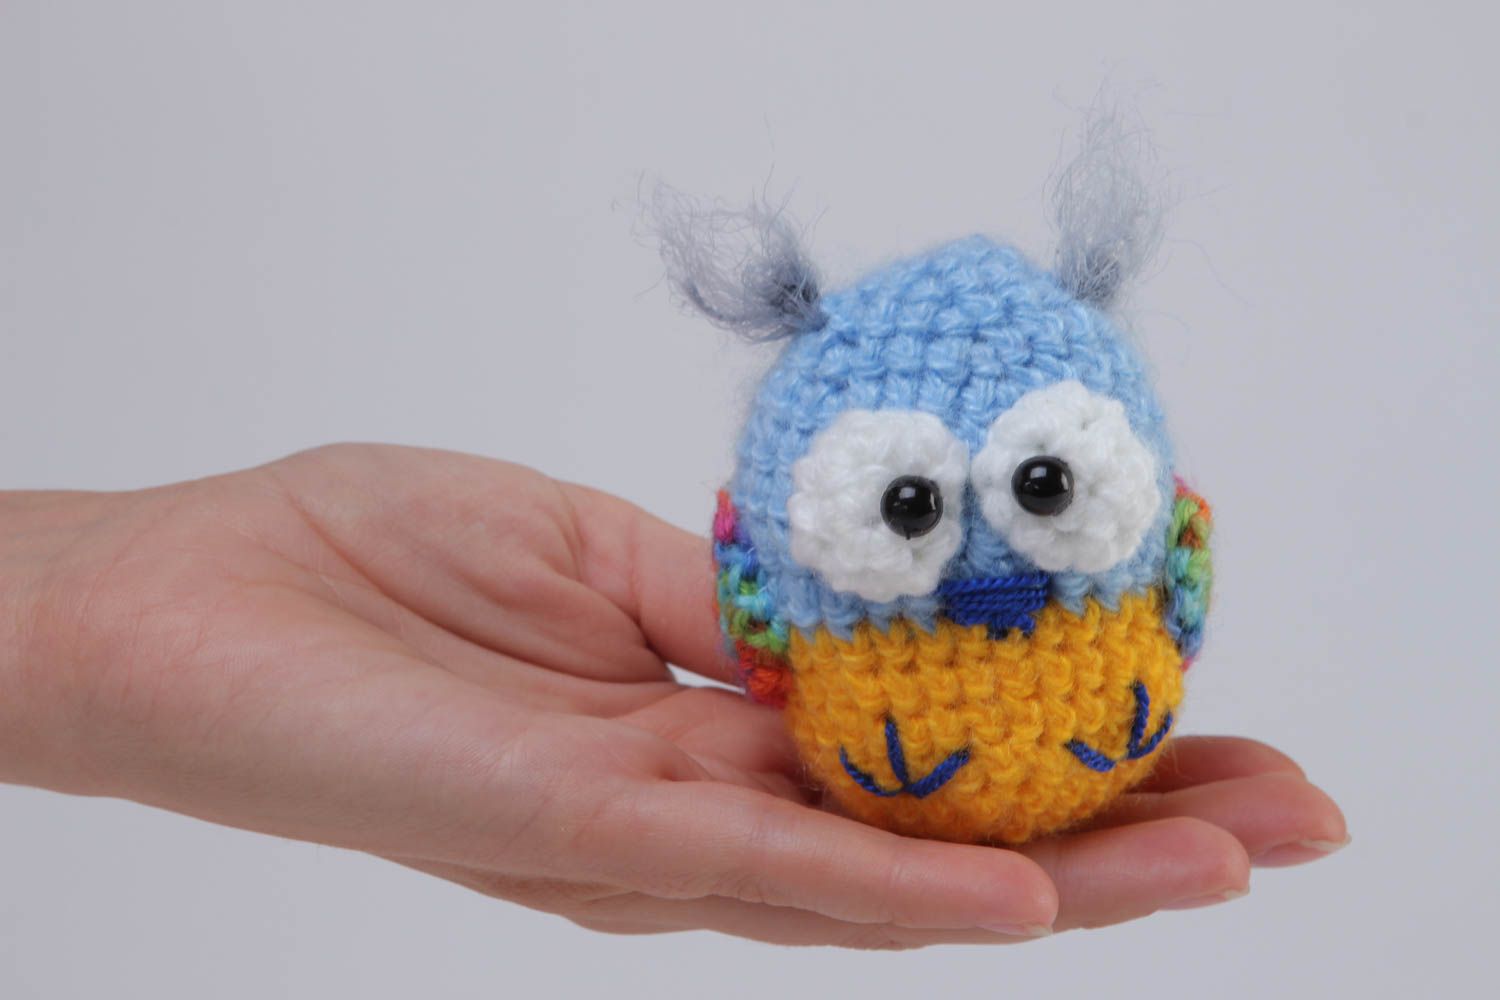 Beautiful handmade crochet soft toy stuffed toy birthday gift ideas small gifts photo 5